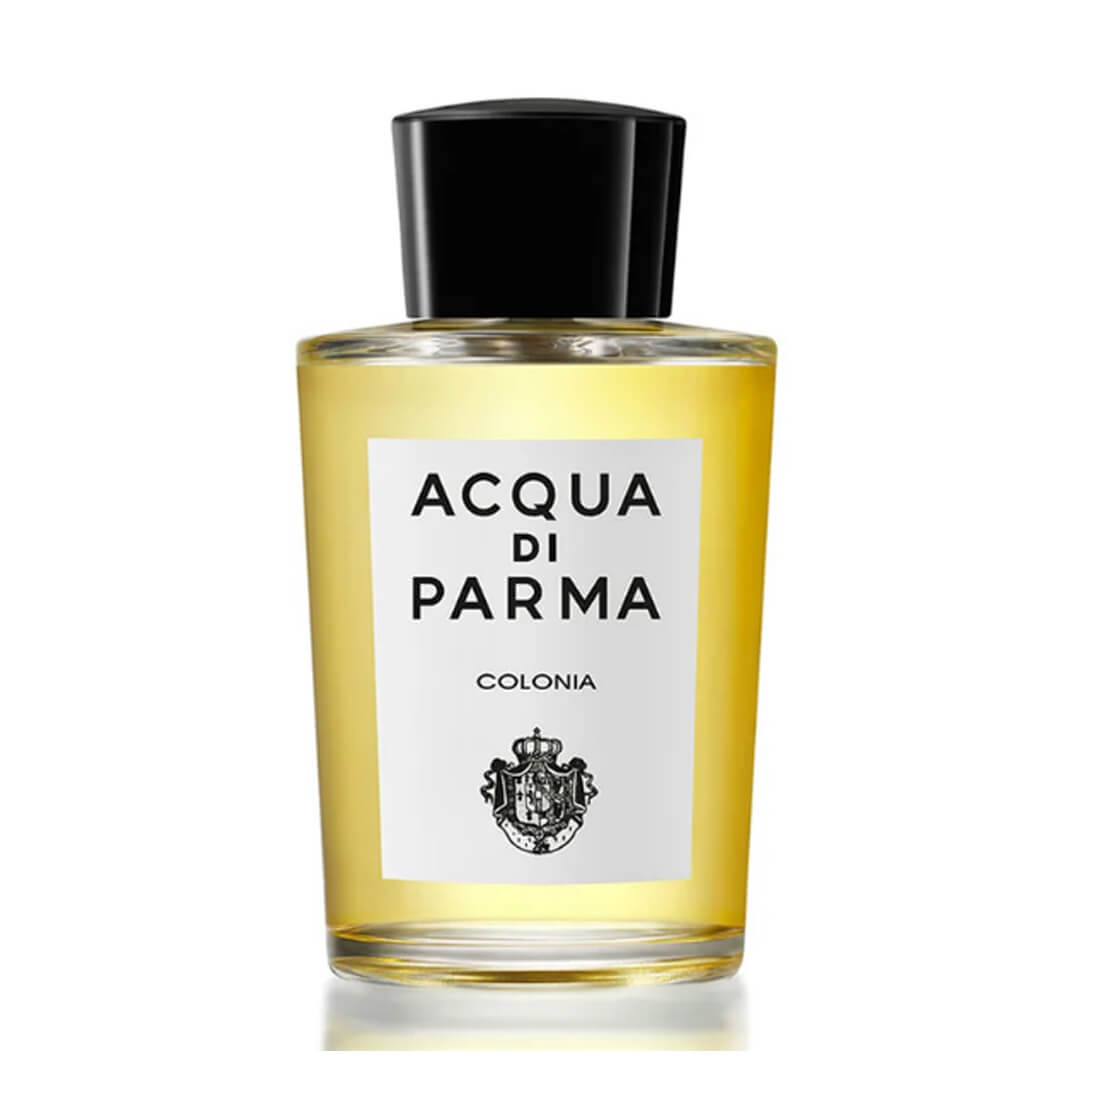 Acqua Di Parma Colonia Eau De Cologne Perfume For Unisex